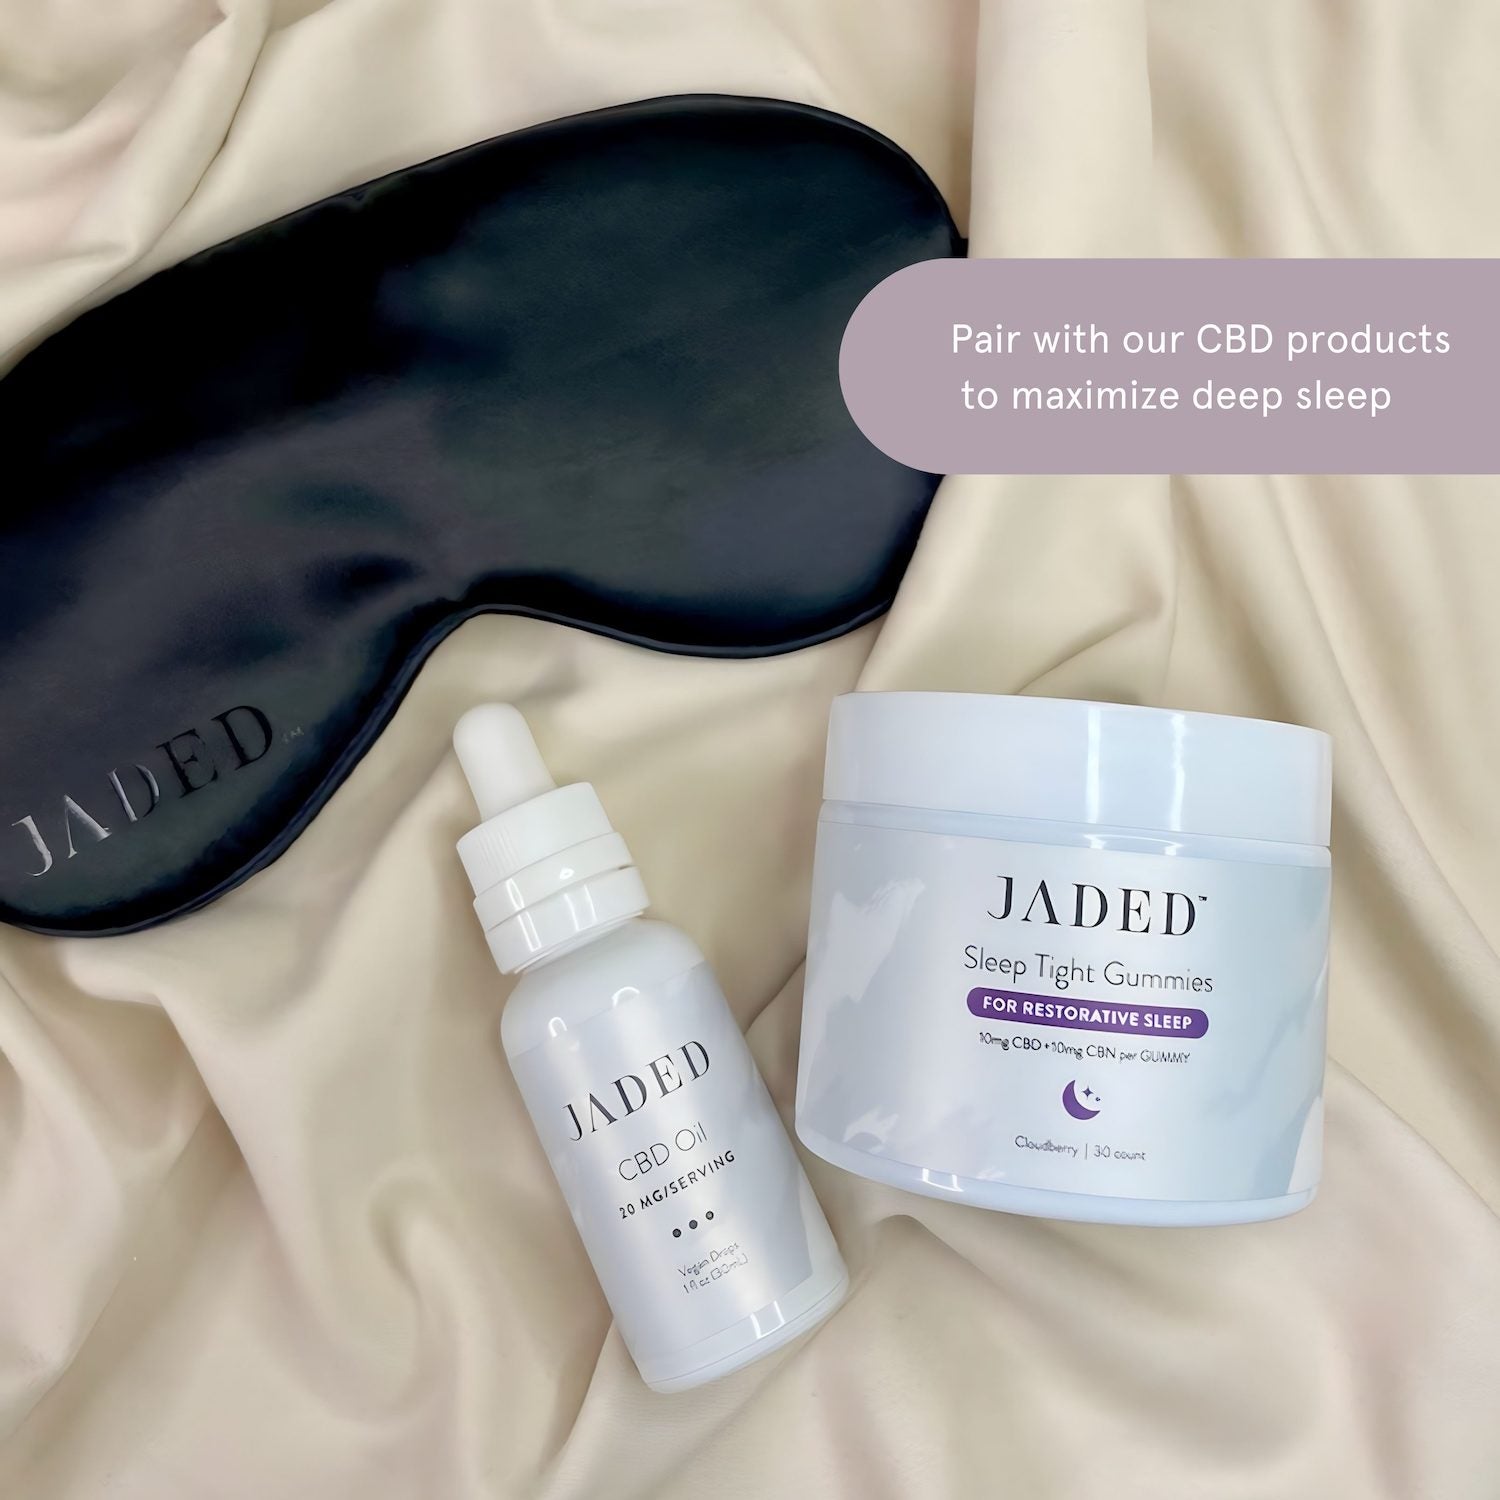 JADED Sleep Mask pairs with CBD products